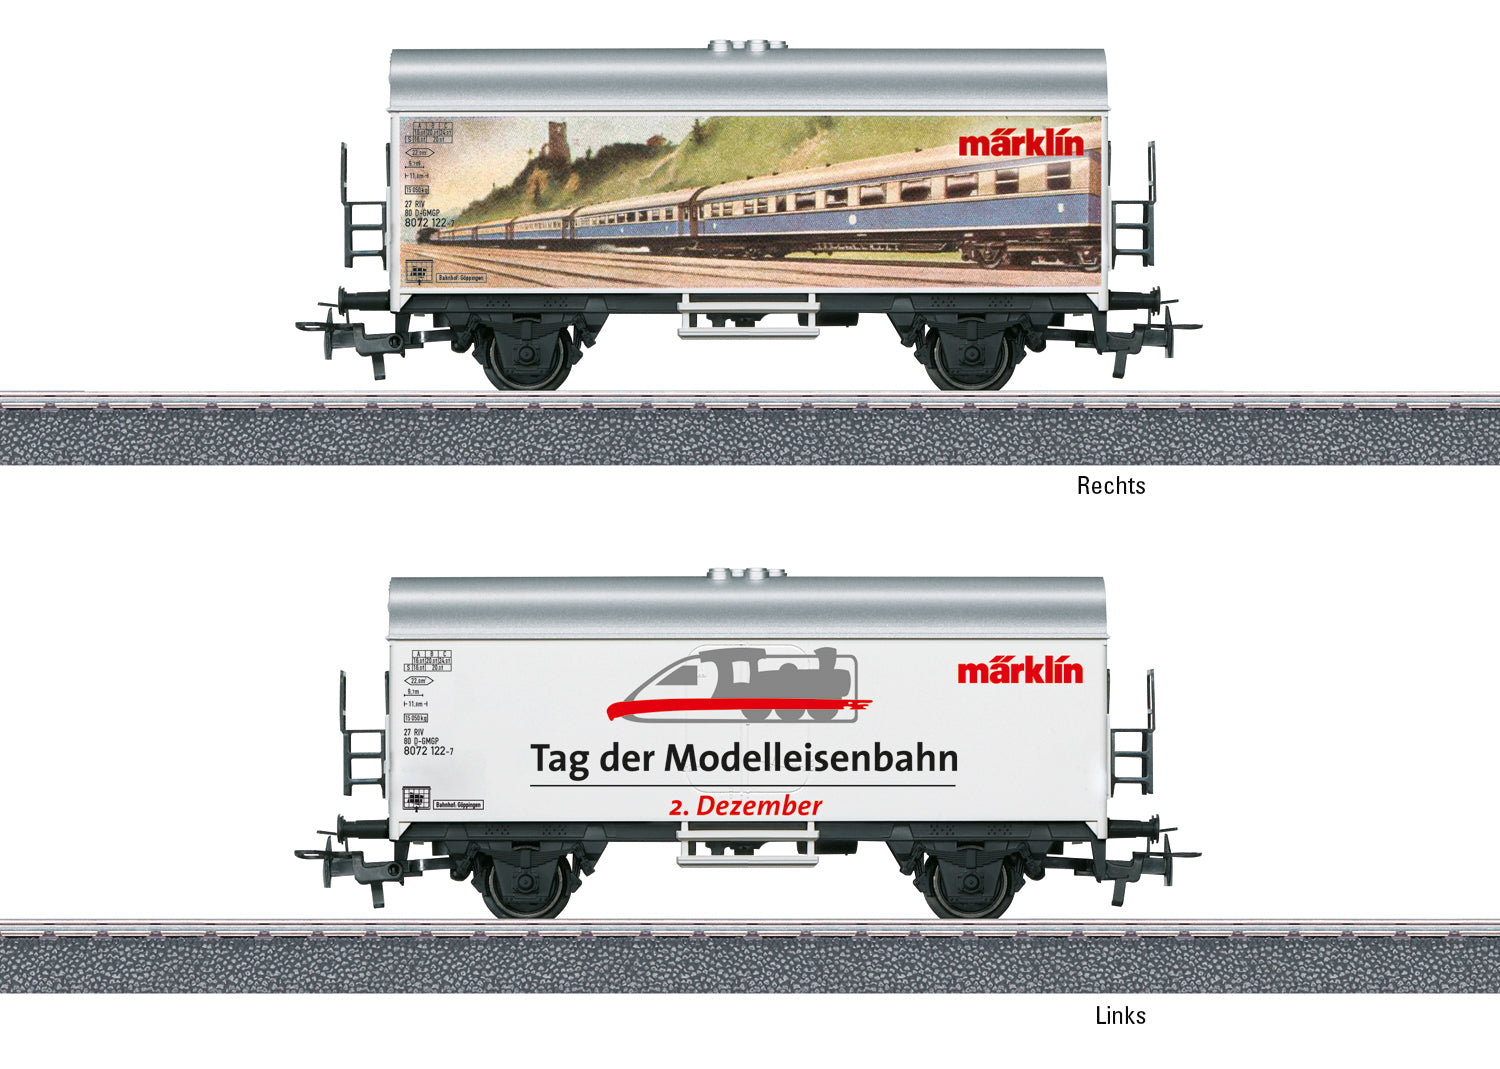 Marklin HO 44269 International Model Railroading Day on December 2, 2020